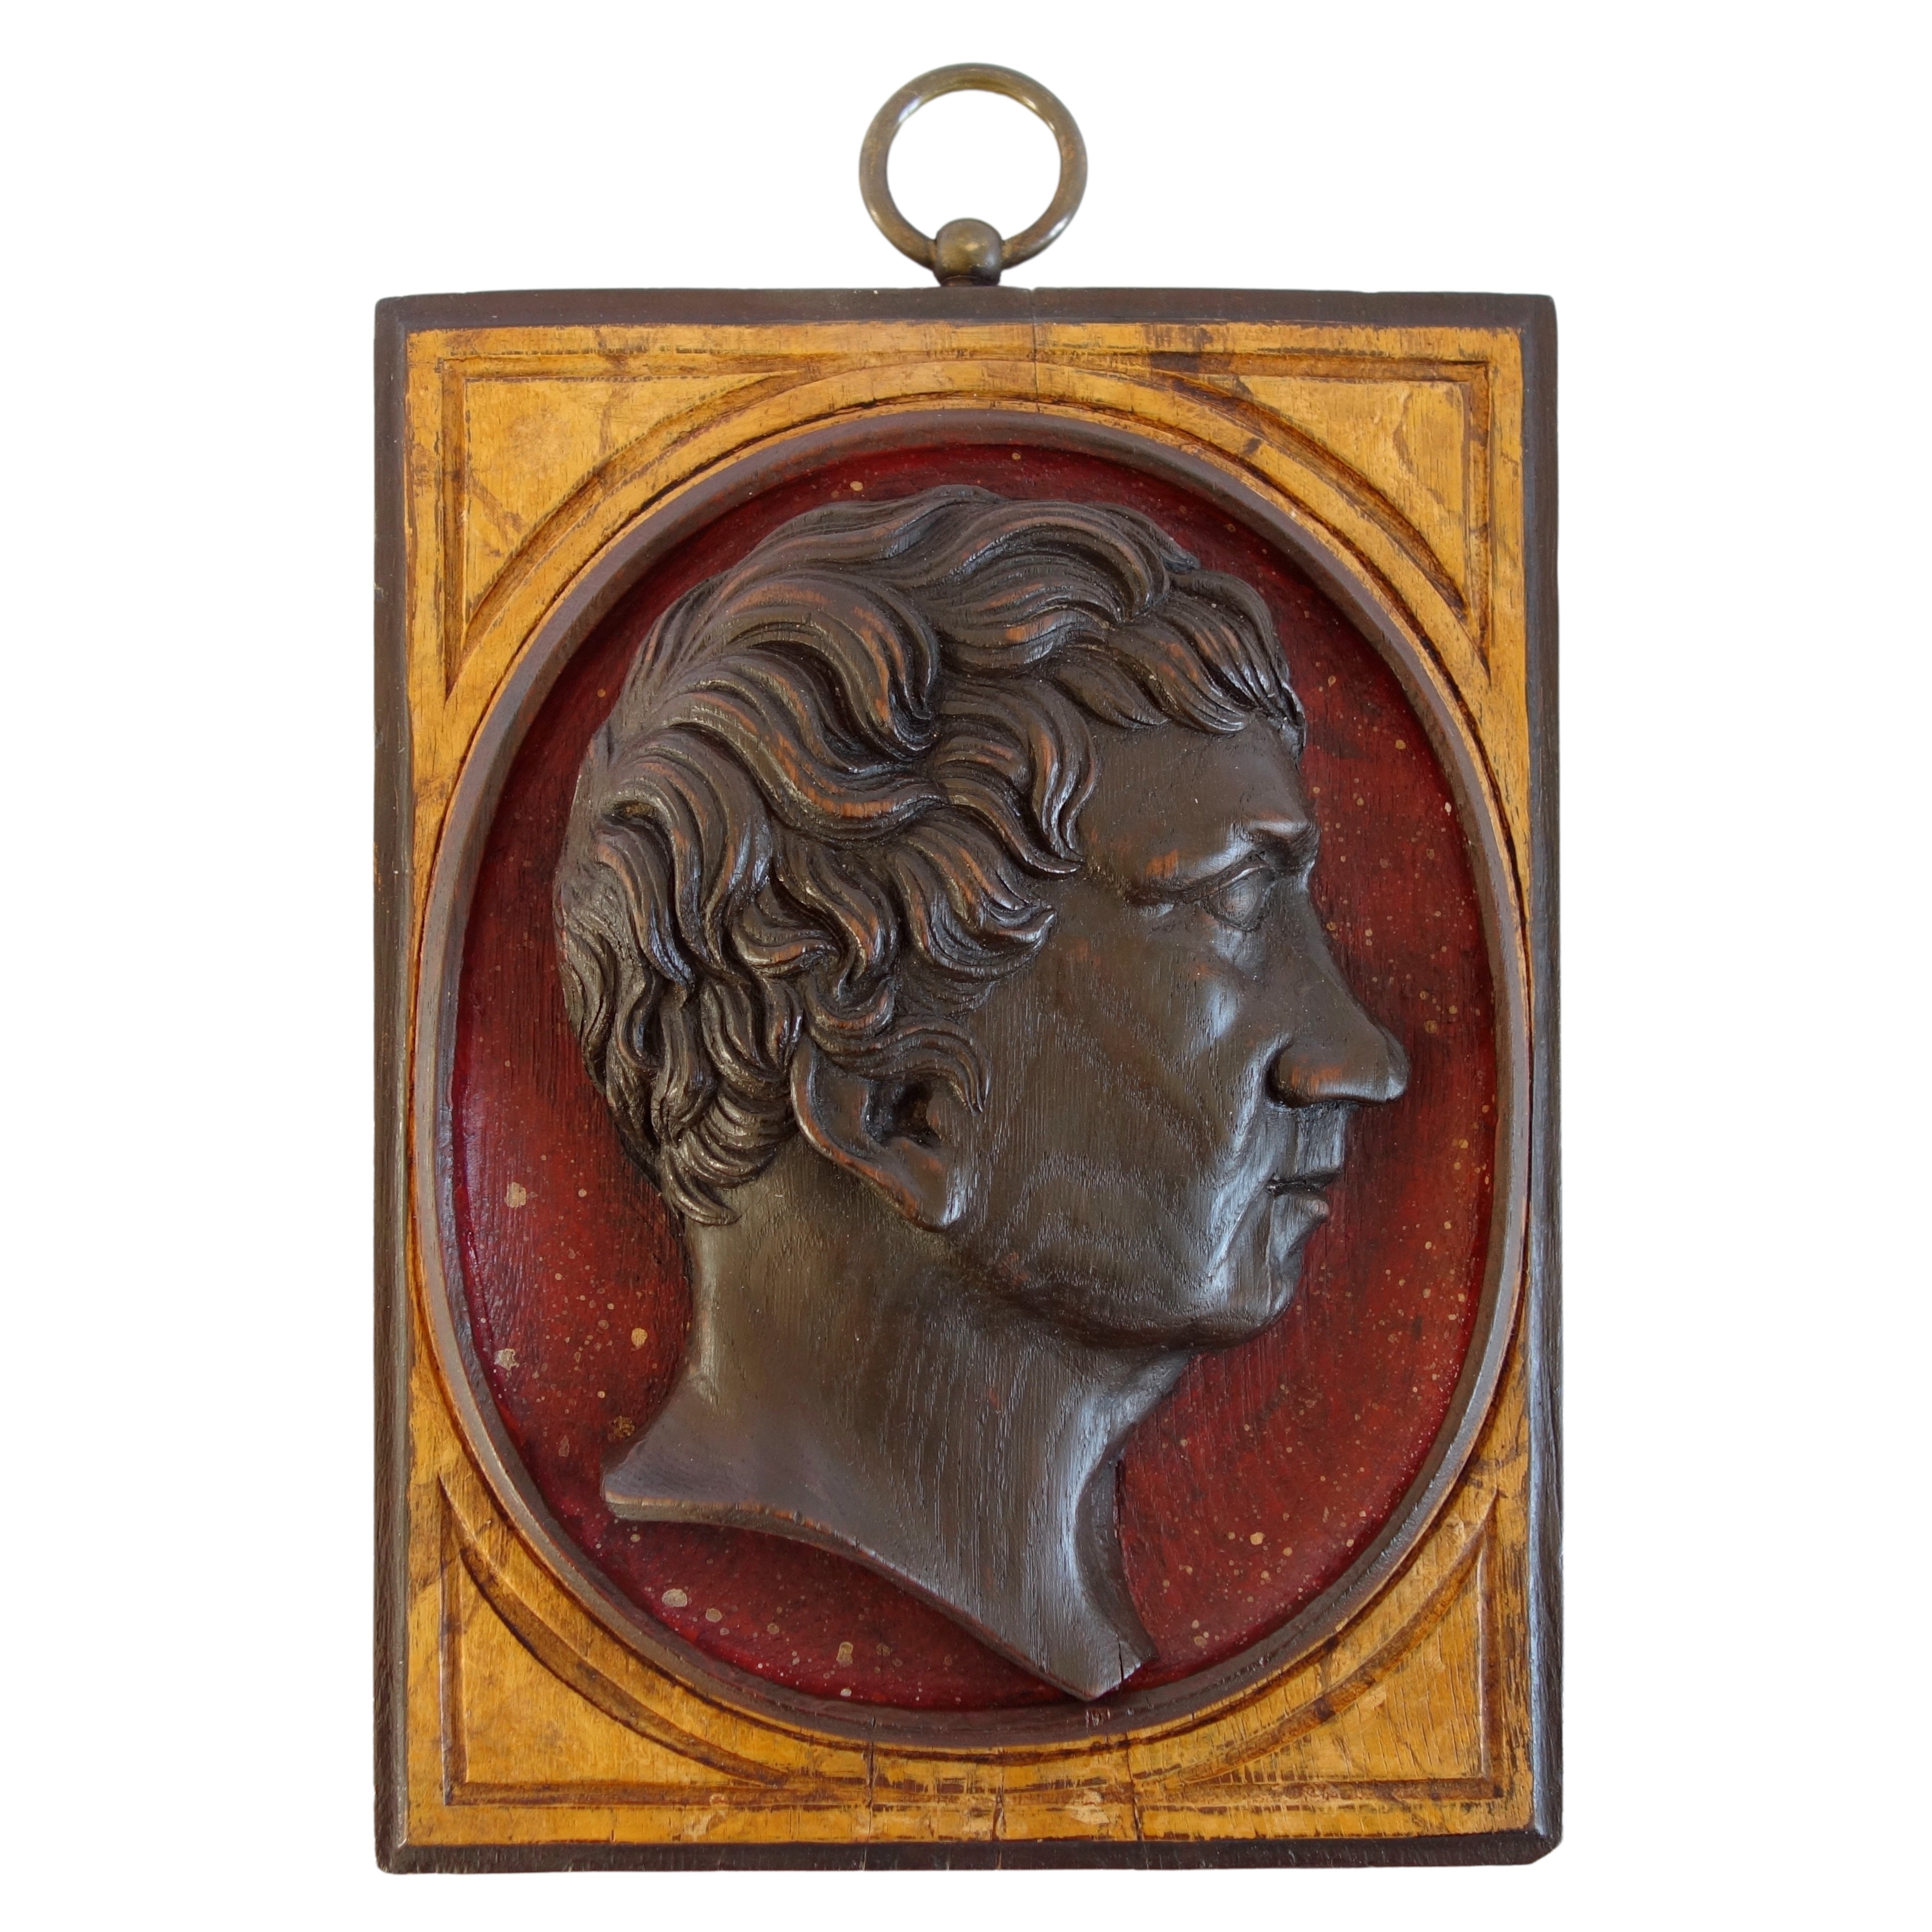 Sculpted wood Roman Emperor profile - 19th century